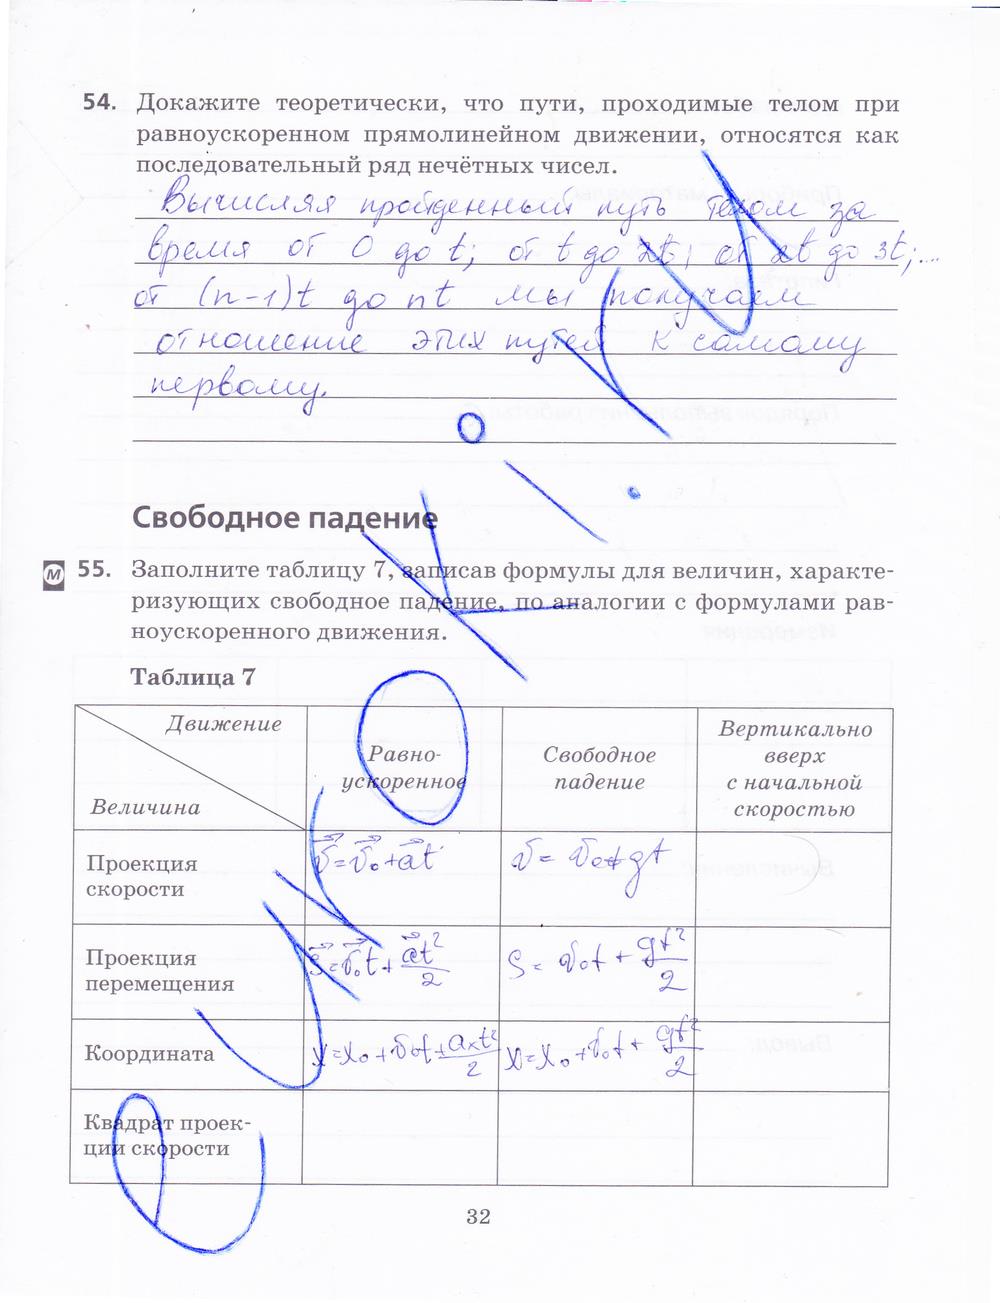 гдз 9 класс рабочая тетрадь страница 32 физика Пурышева, Важеевская, Чаругин